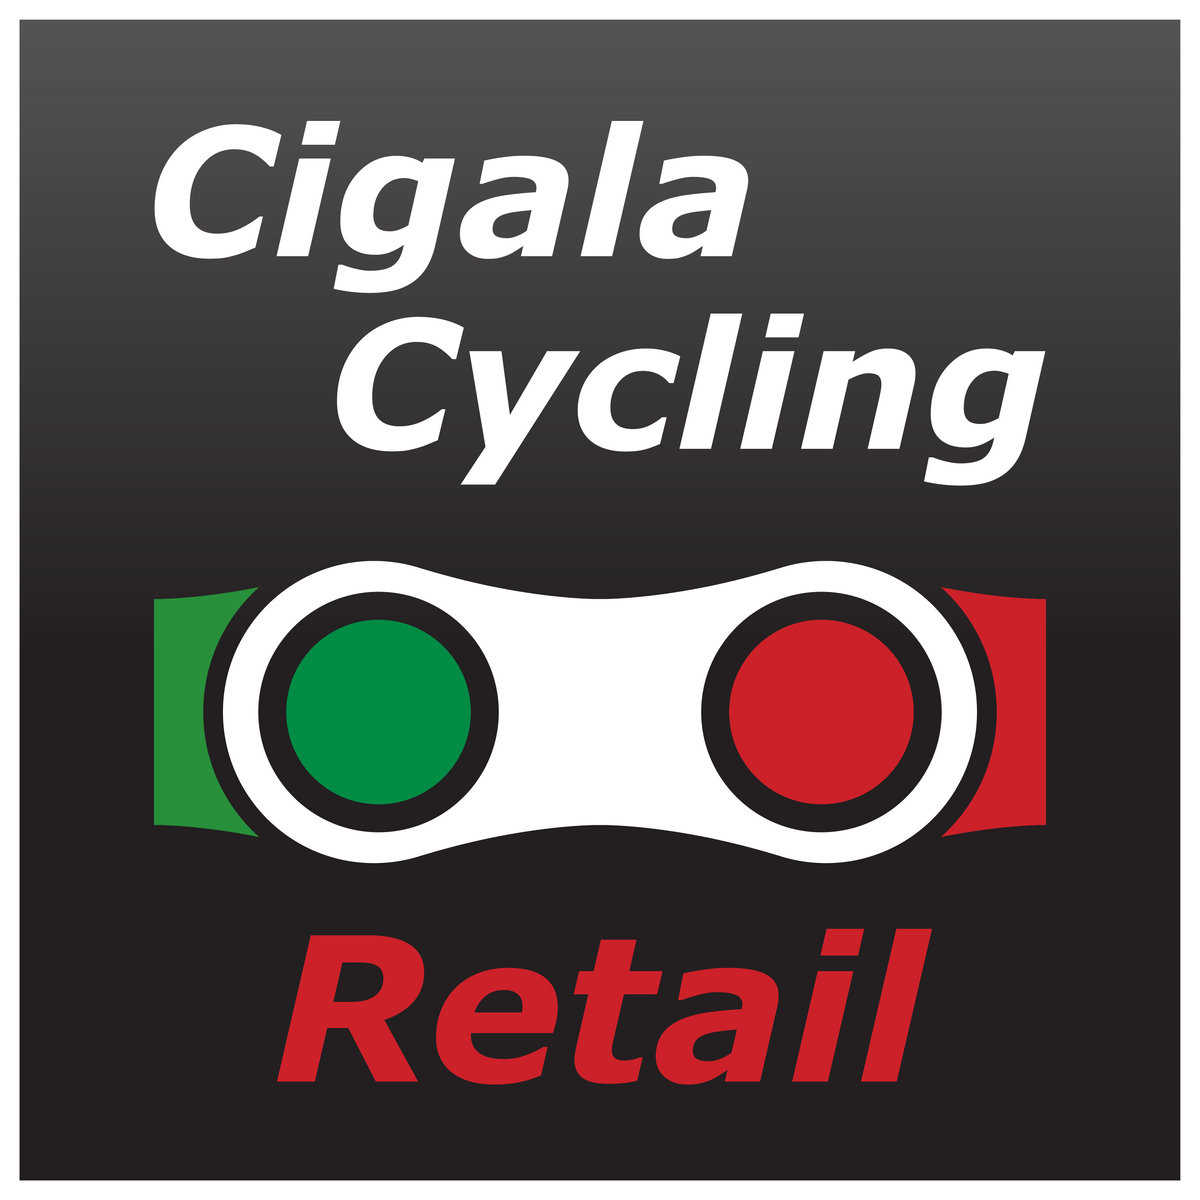 Polar Vantage M2 - Cigala Cycling Retail